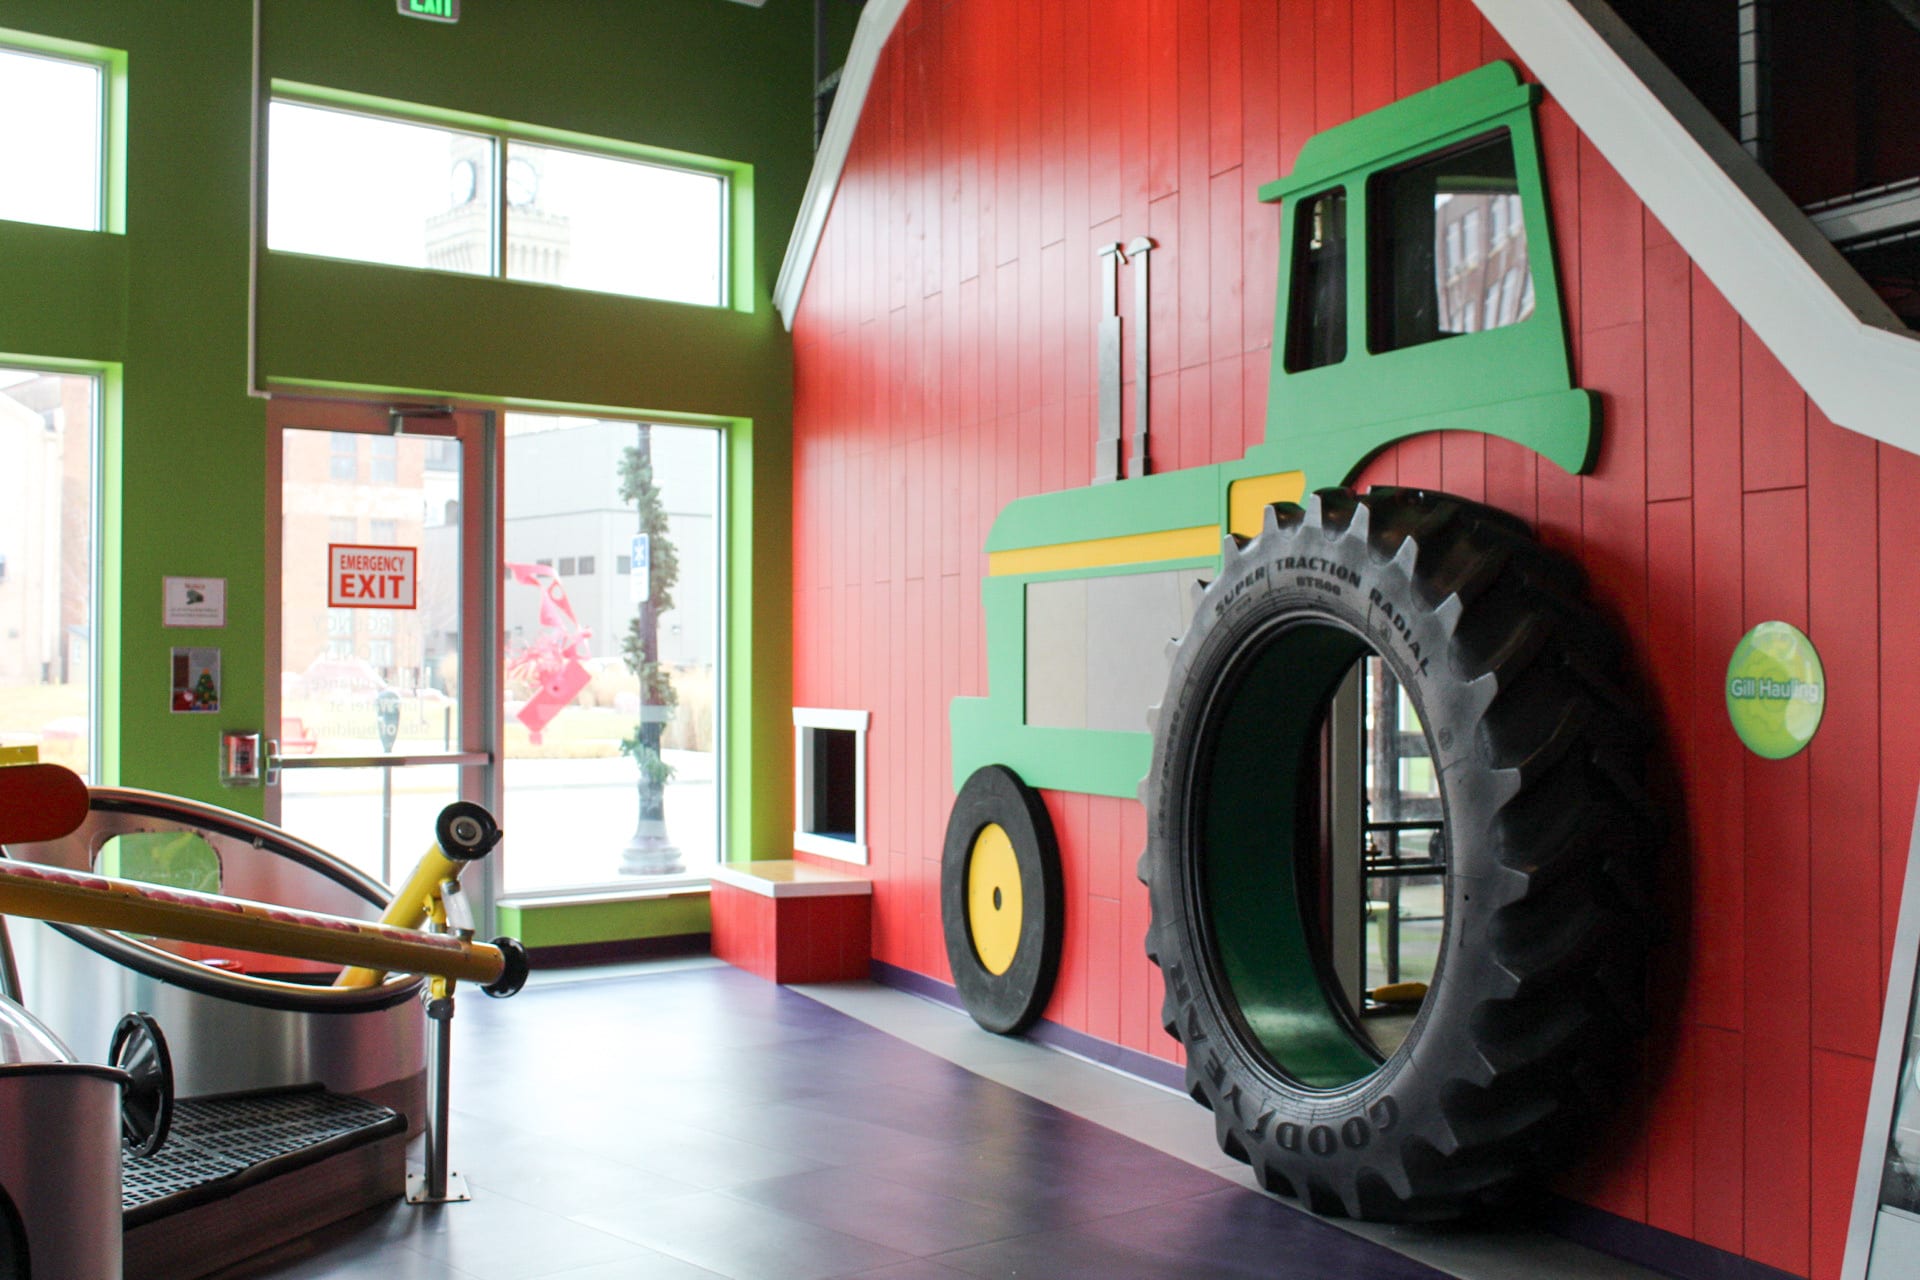 Tractor façade on barn in exhibit.